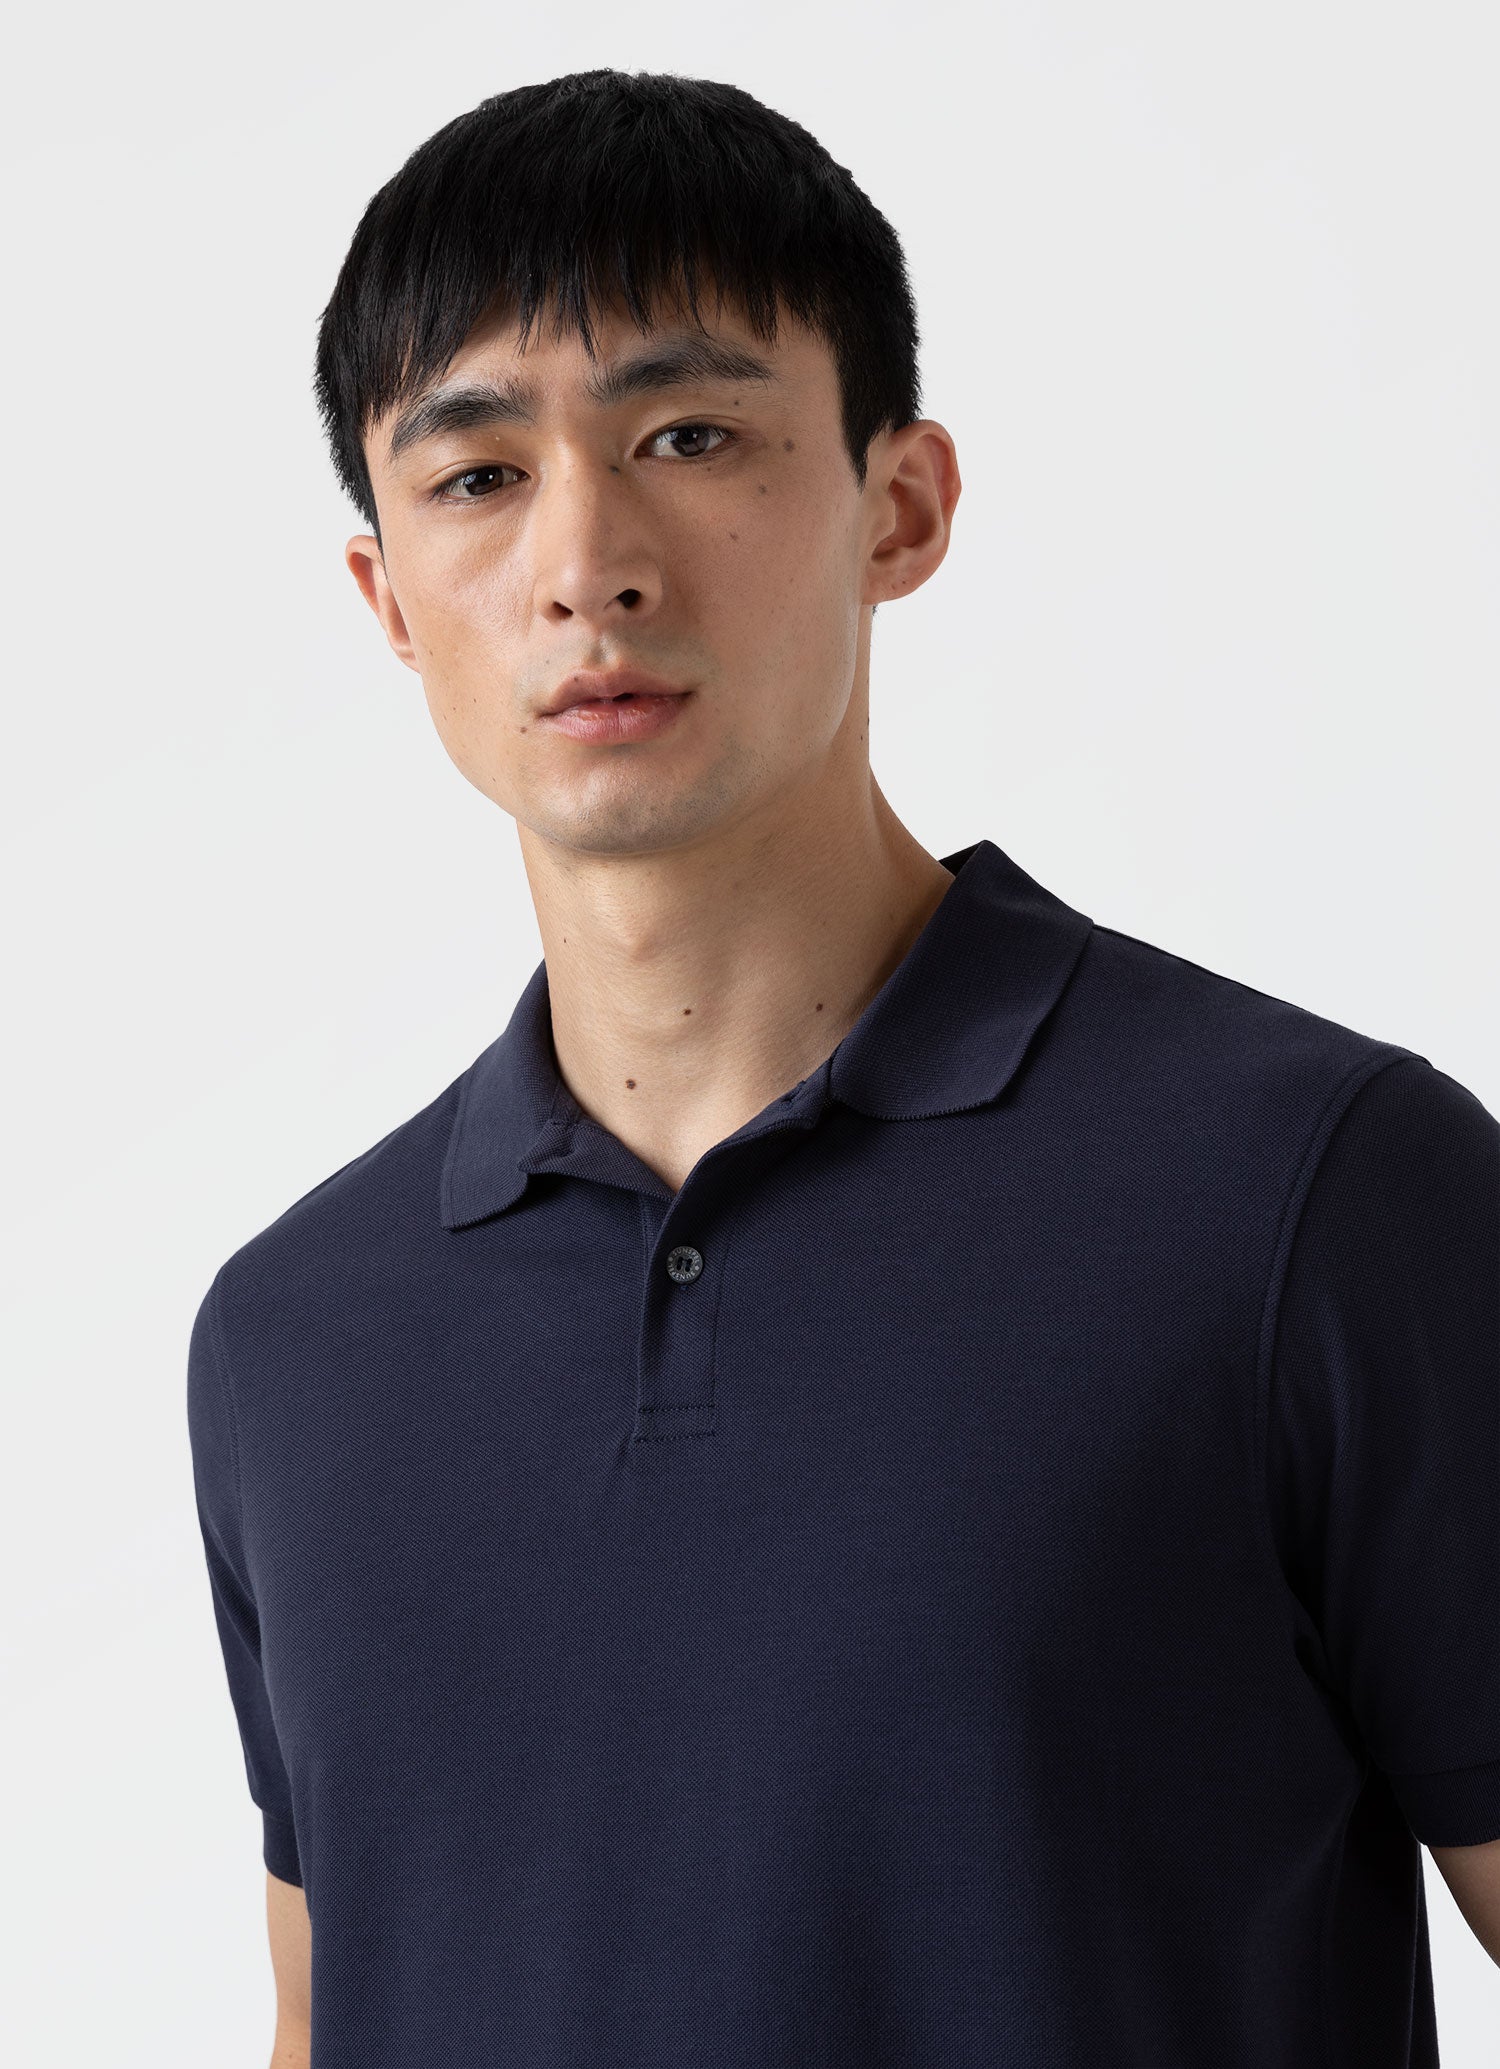 Men's Piqué Polo Shirt in Navy | Sunspel